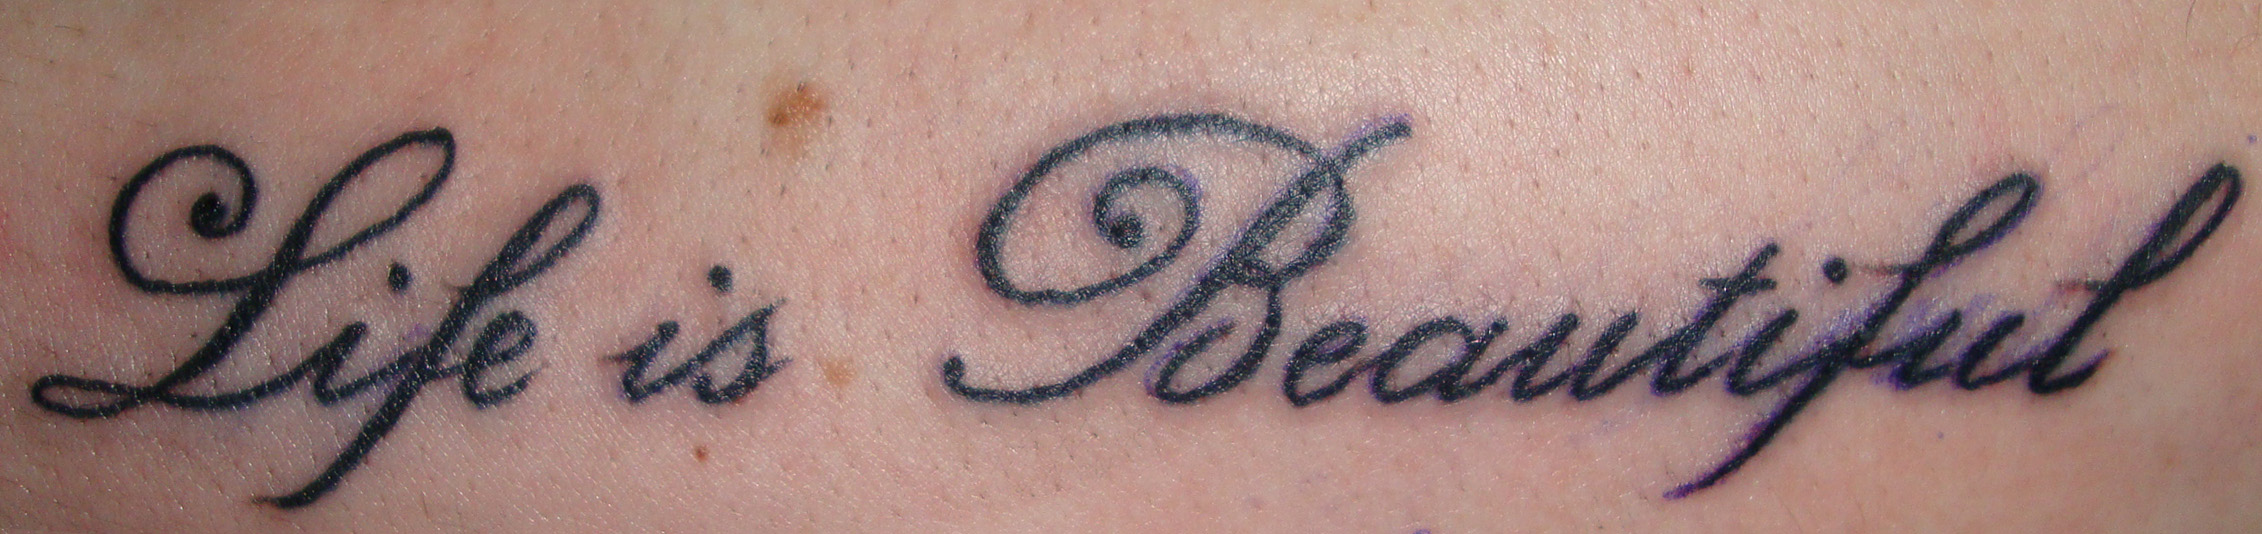 Tattoo uploaded by Victoria Hennes  Life is beautiful in Italian   Tattoodo